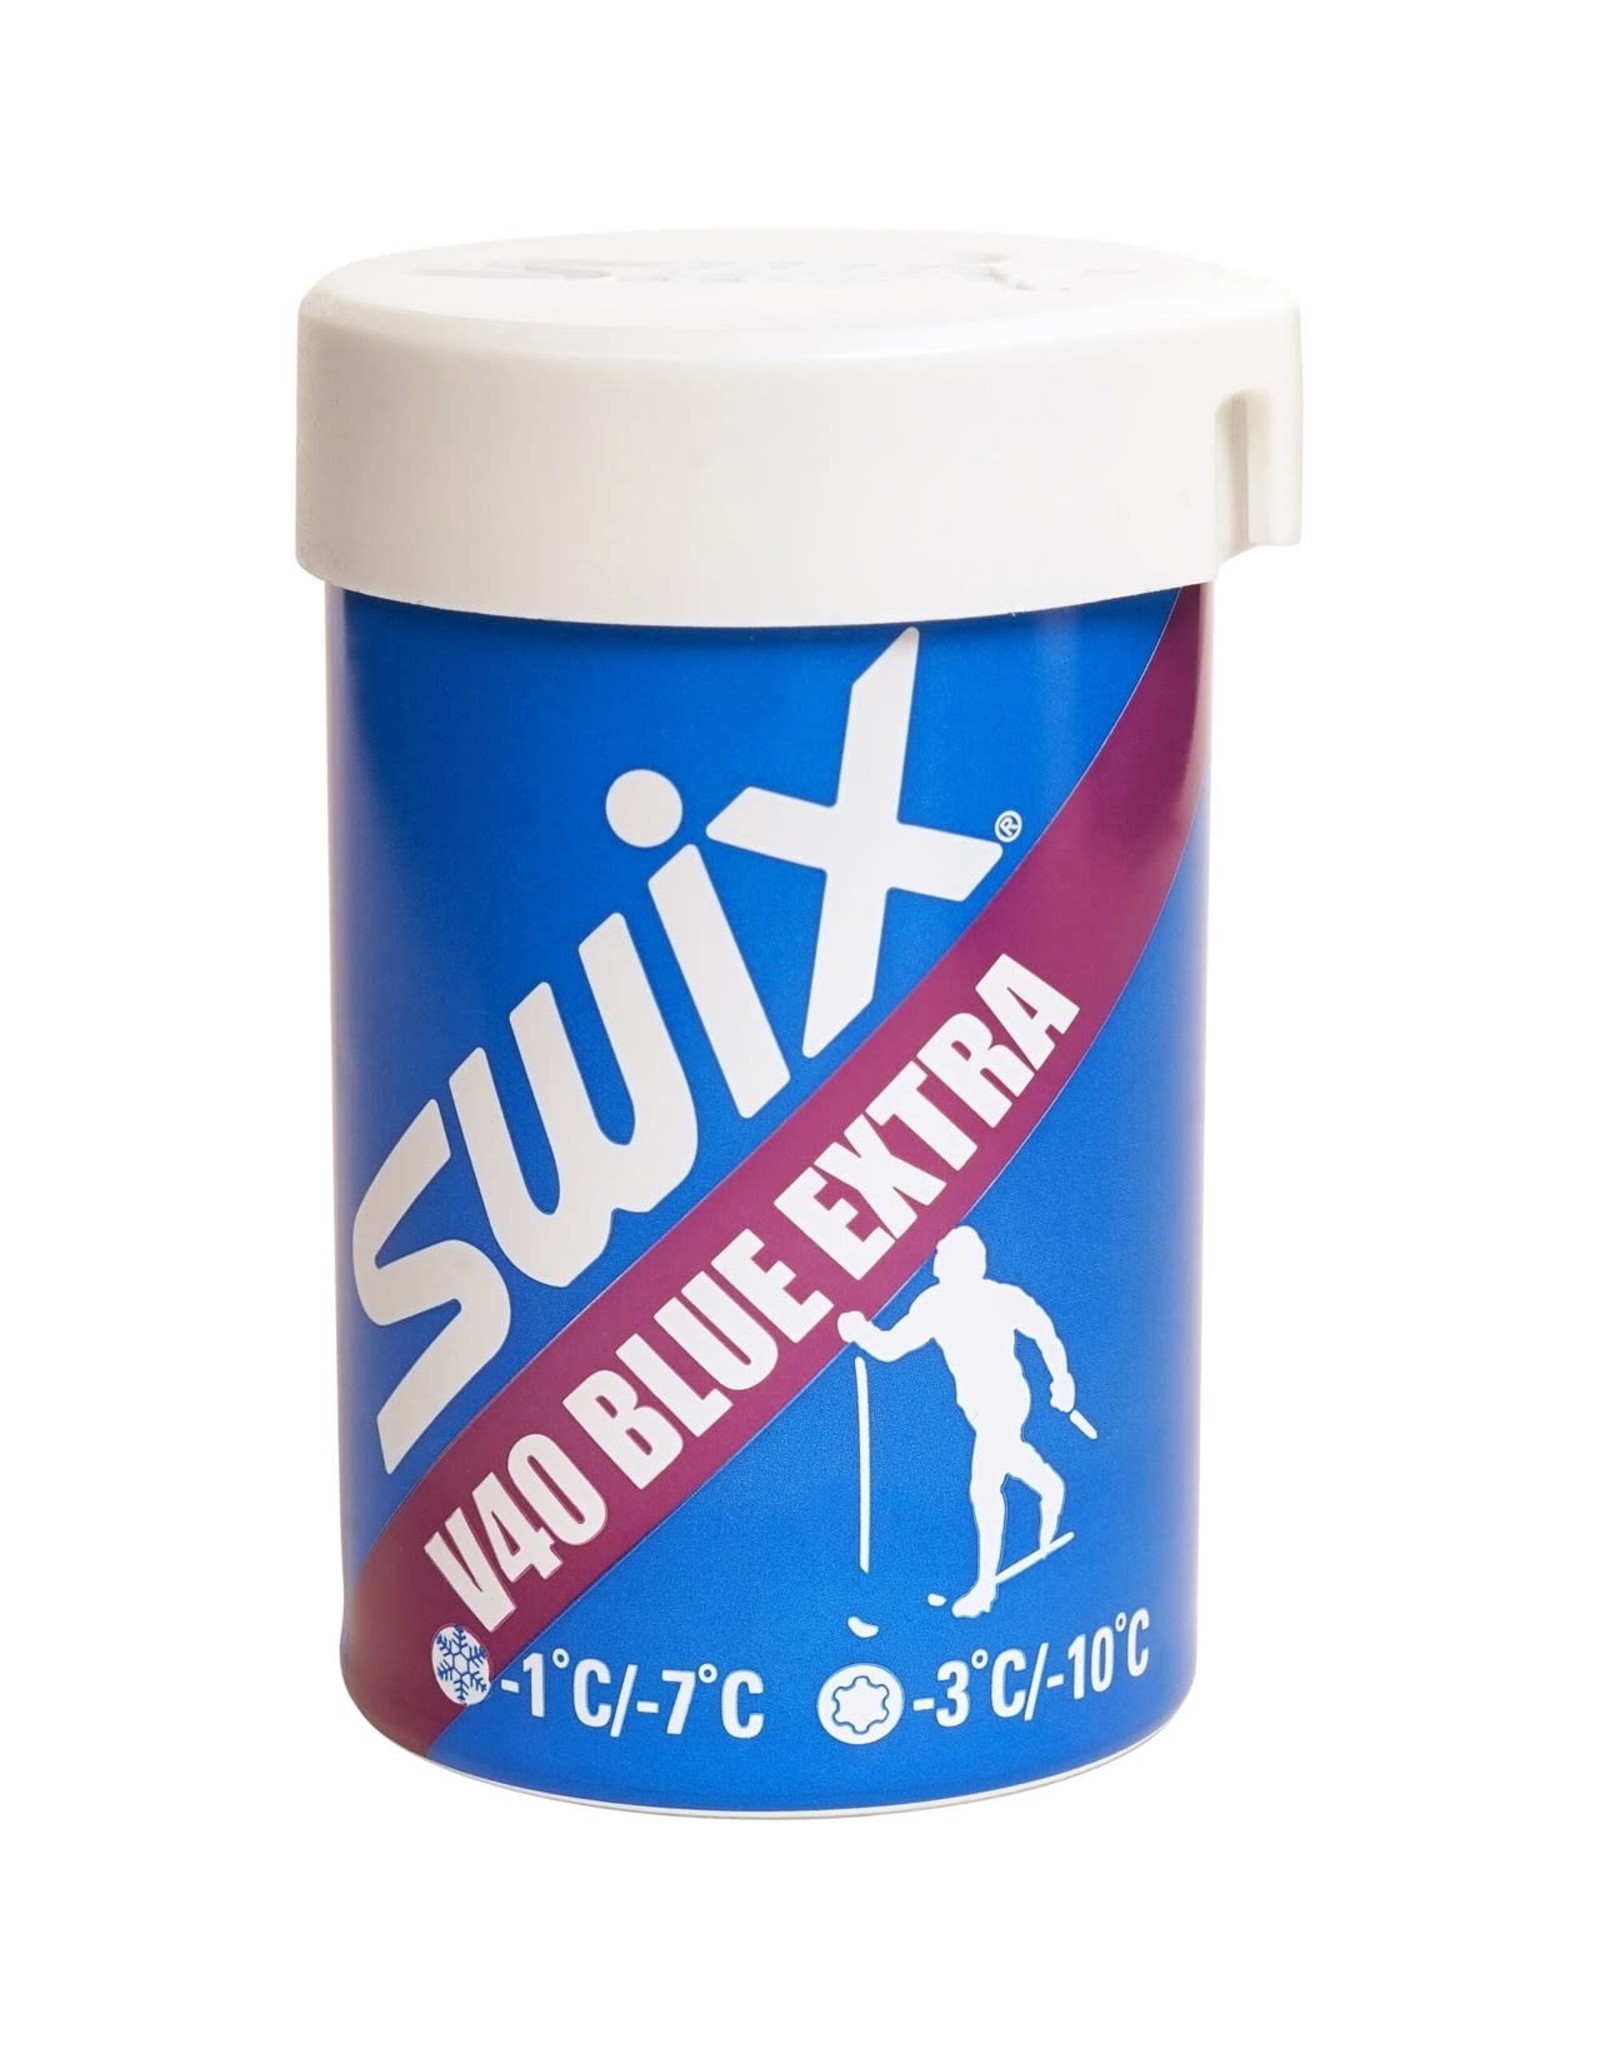 Swix SWIX V40 BLUE EXTRA GRIPWAX